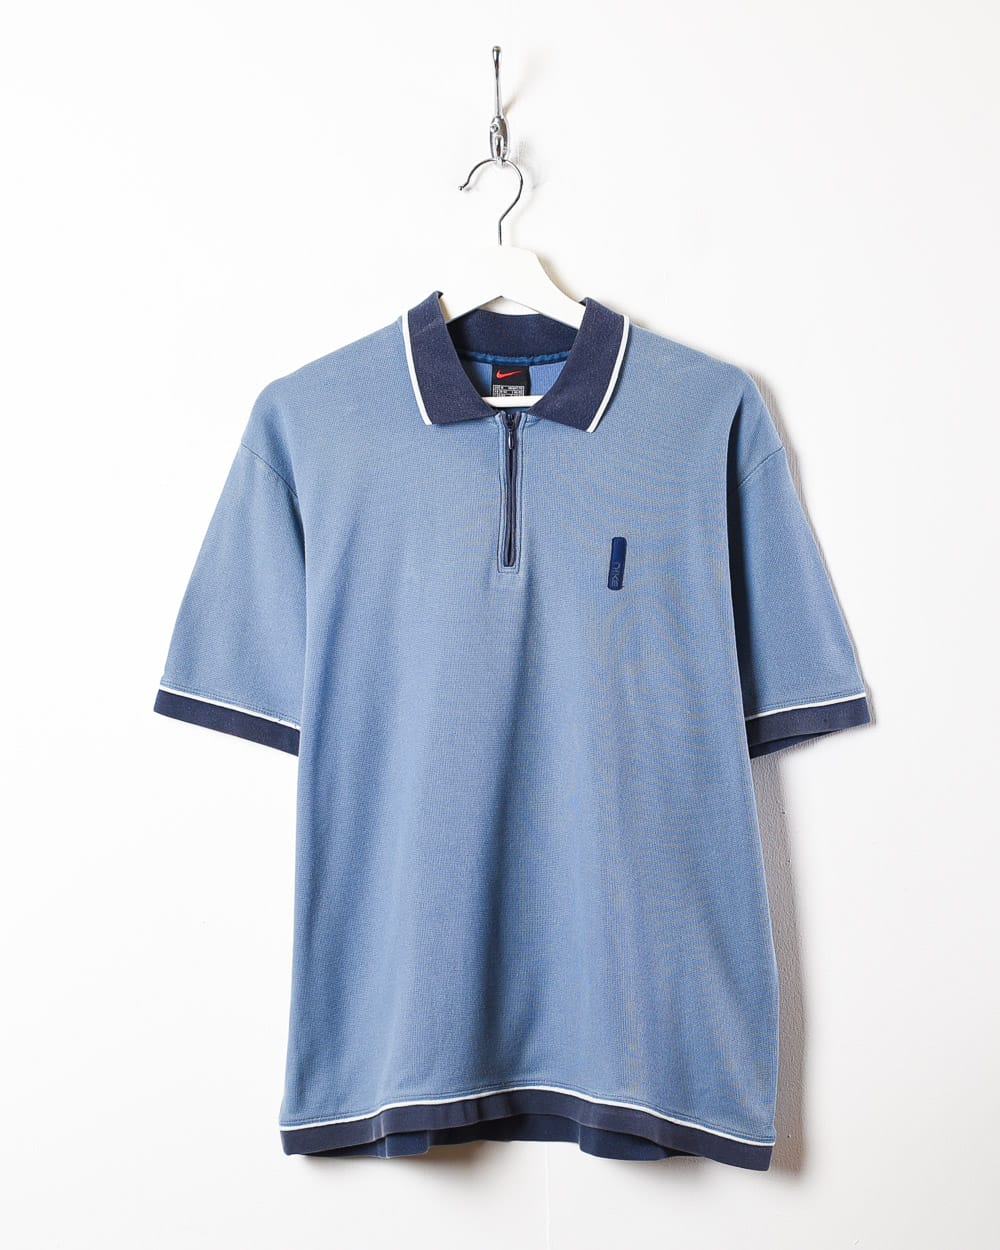 Blue Nike 1/4 Zip Polo Shirt - Medium